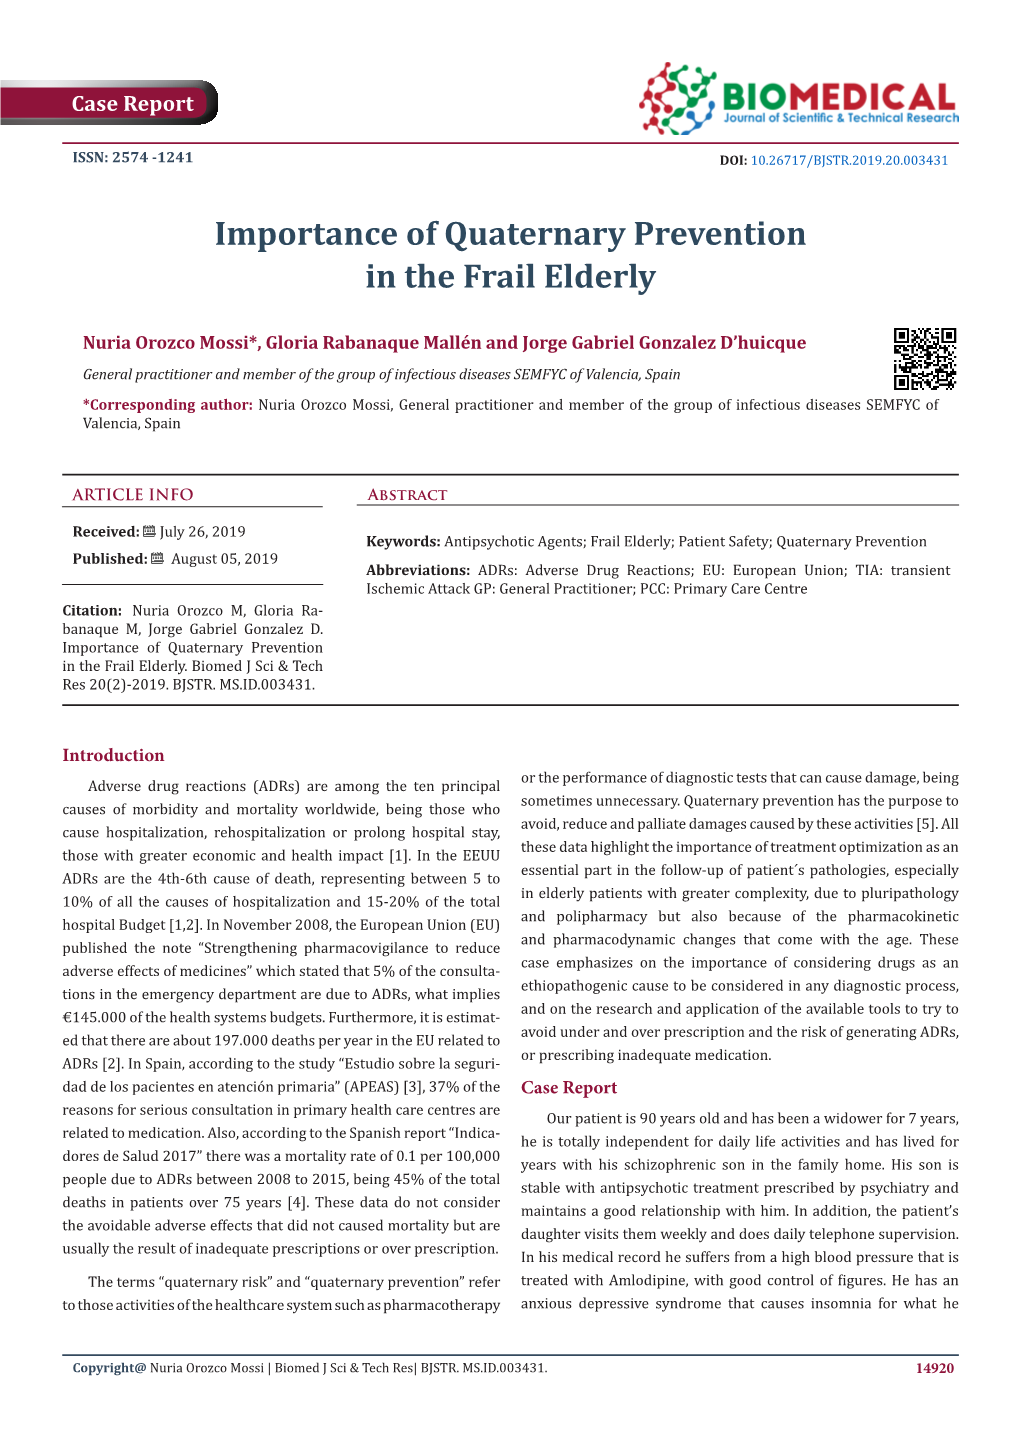 Importance of Quaternary Prevention in the Frail Elderly